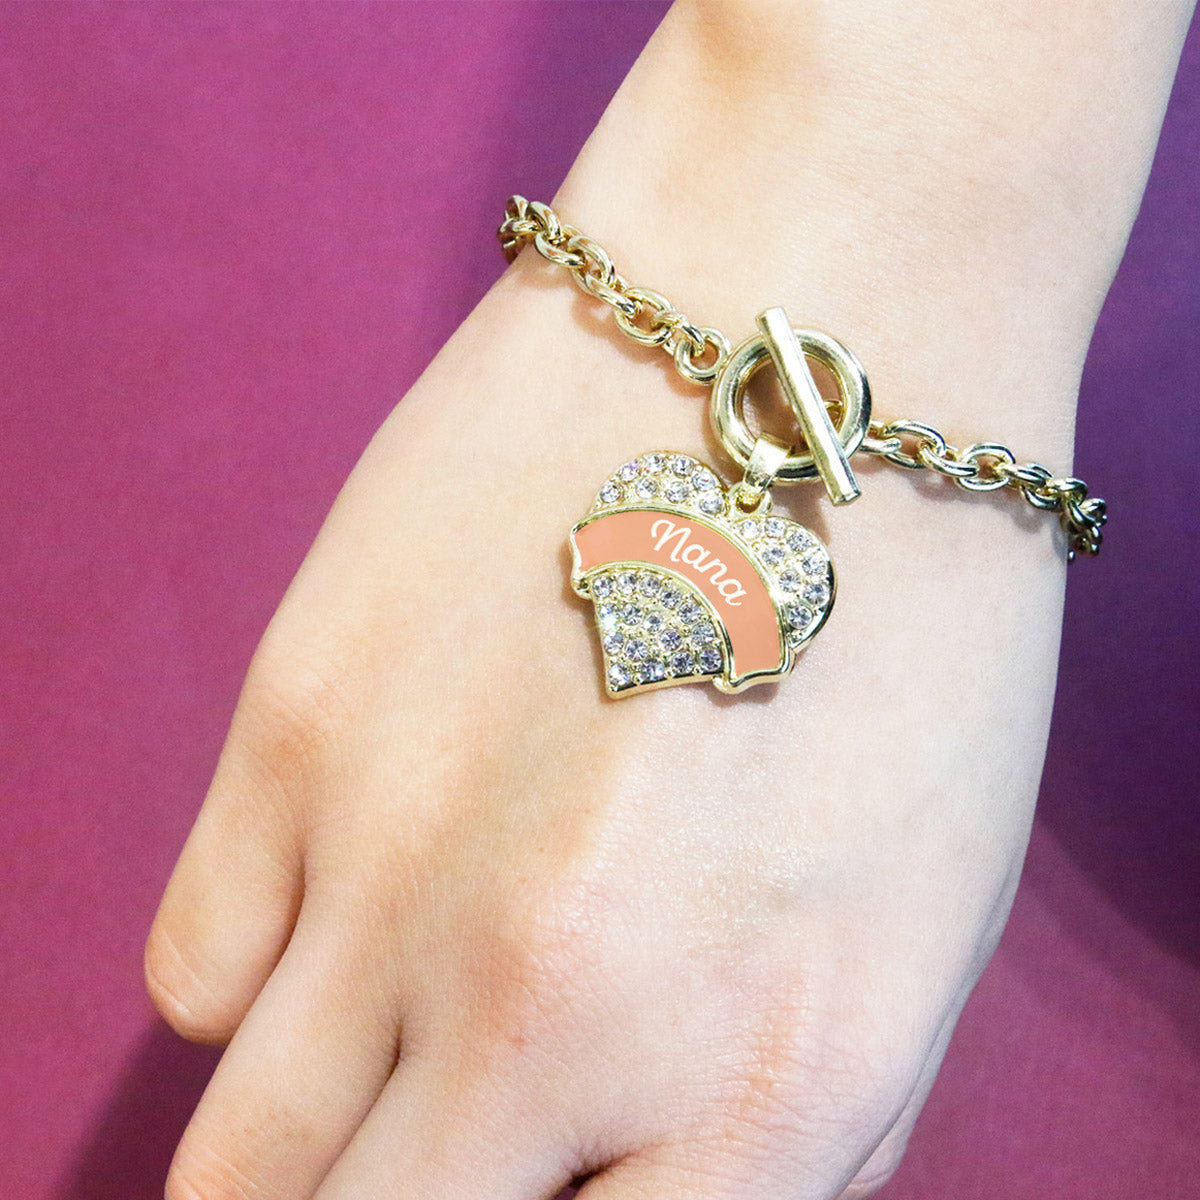 Gold Peach Nana Pave Heart Charm Toggle Bracelet